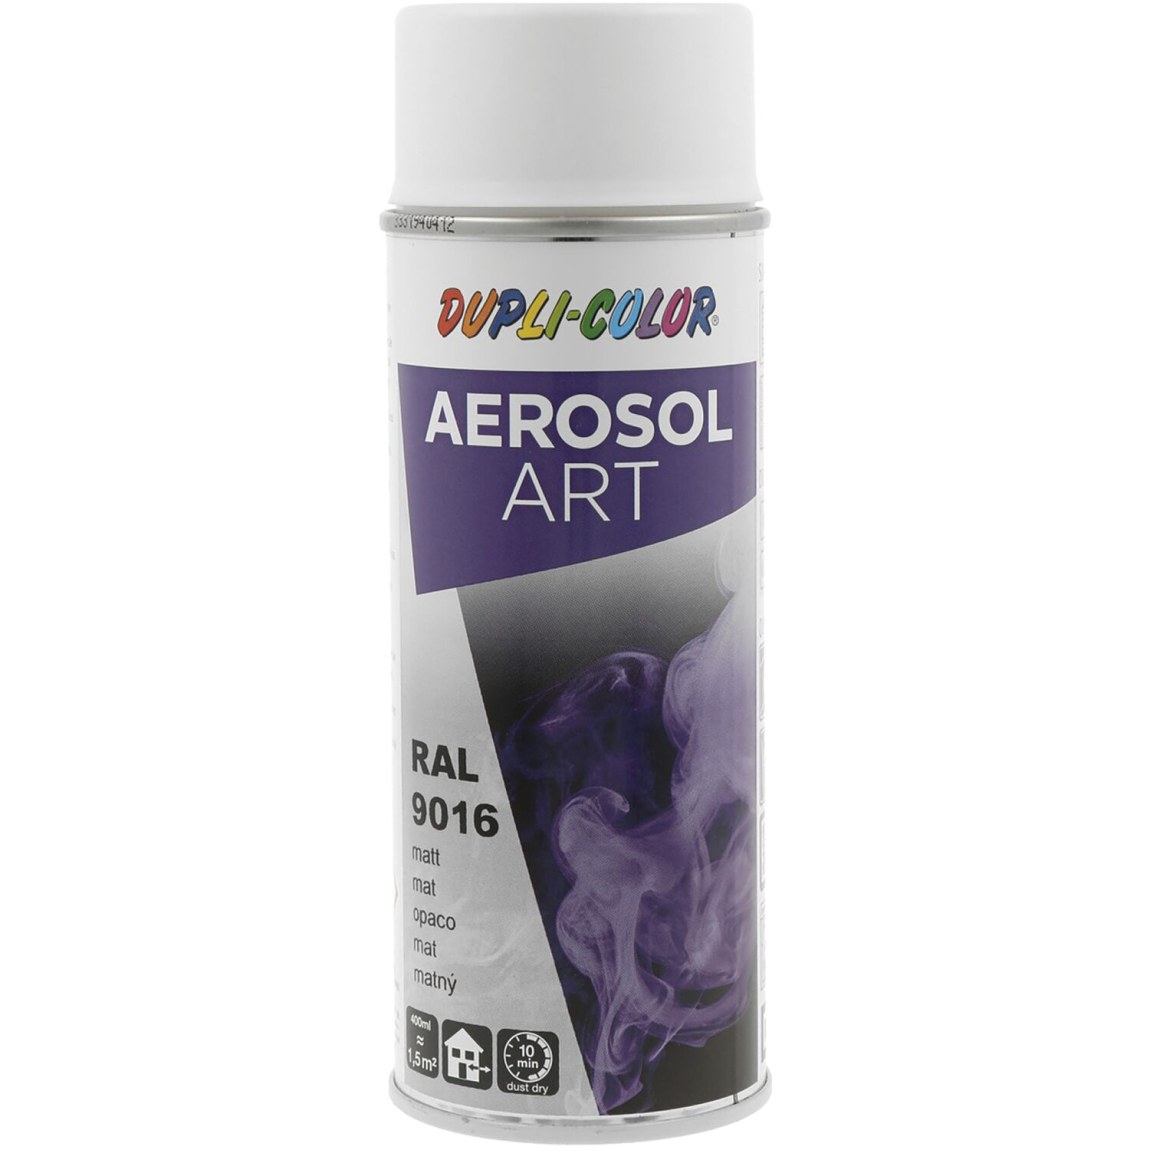 Dupli-Color Aerosol Art sprej 400 ml doprav.bílá mat / RAL 9016 - Železářství Chemicko-technické výrobky Technické aerosoly Lak ve Spreji